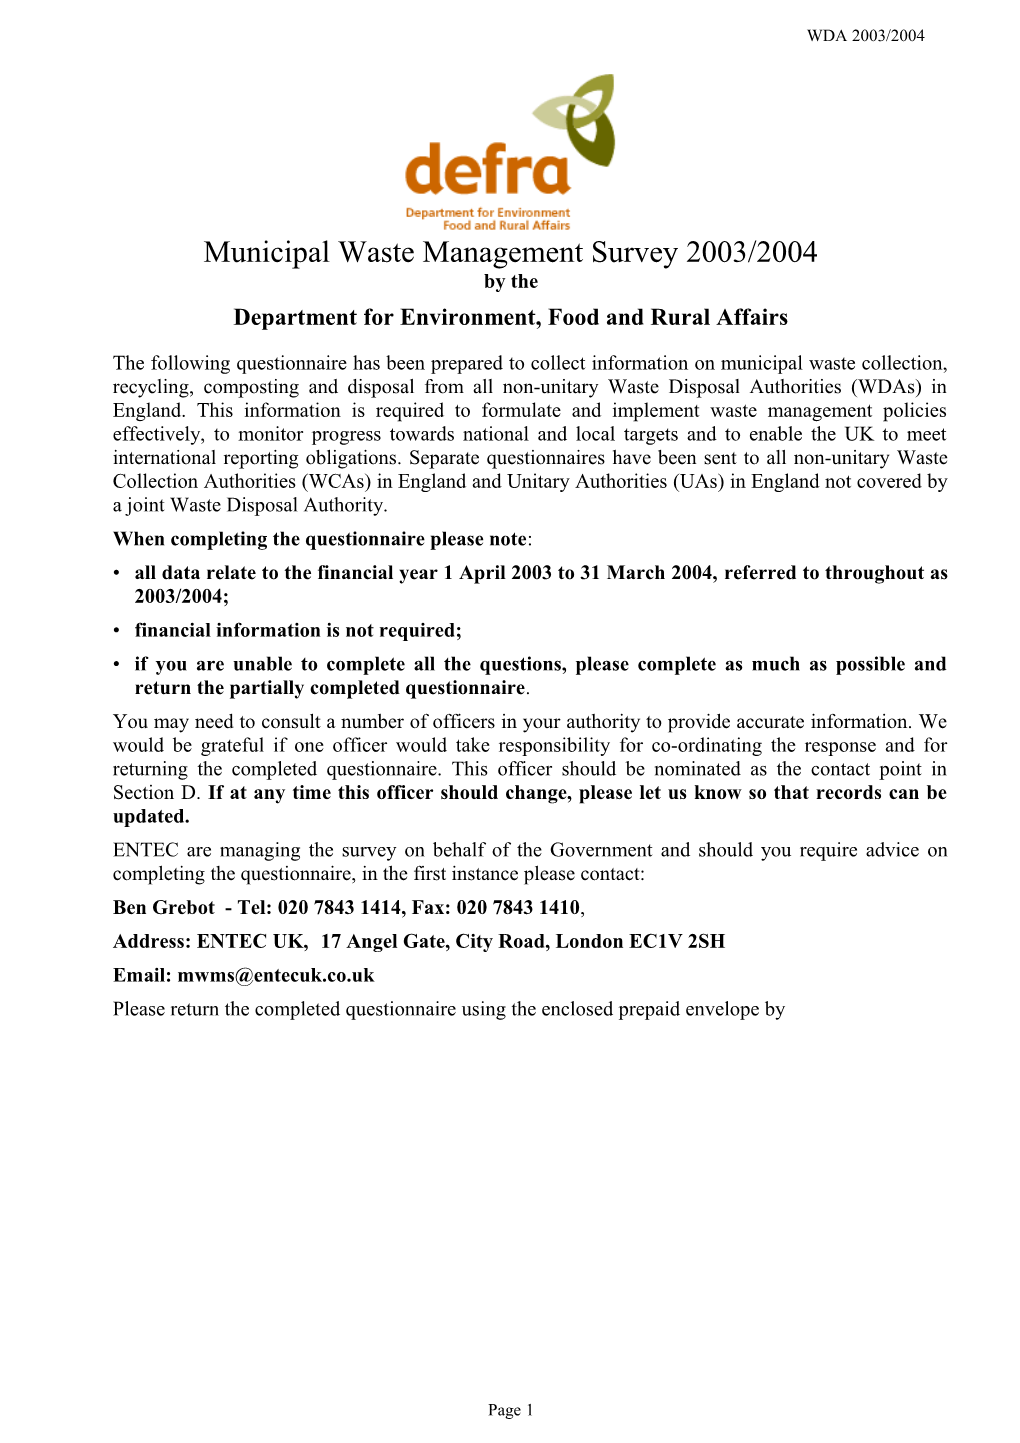 Municipal Waste Management Survey 2003/2004